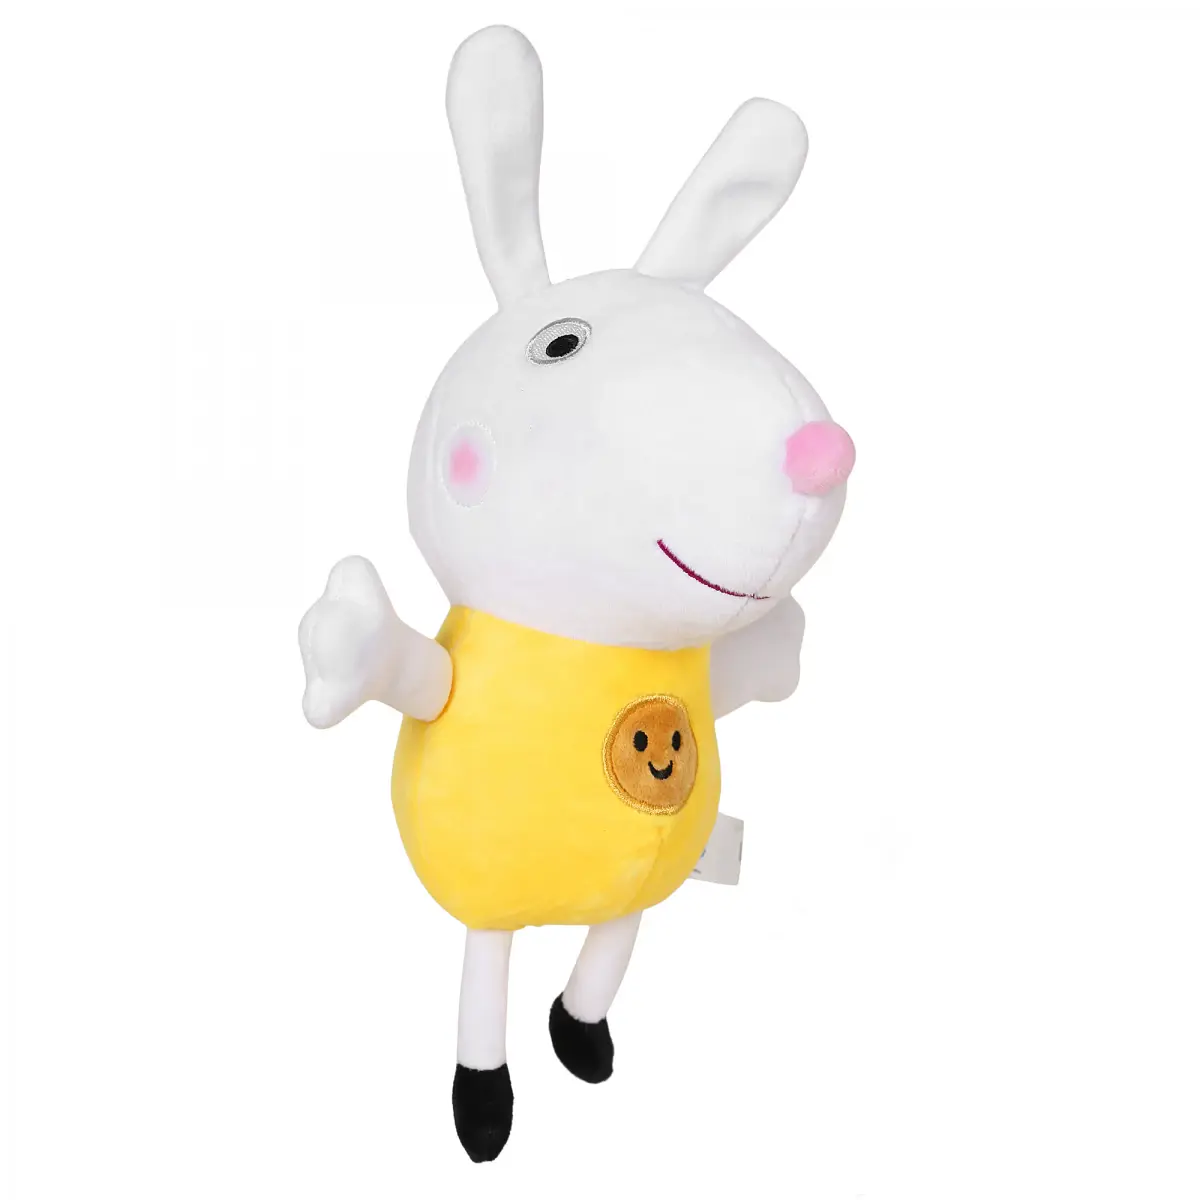 Peppa Pig Richard Rabbit Soft Toy for Kids, 30cm, 18M+, Multicolour